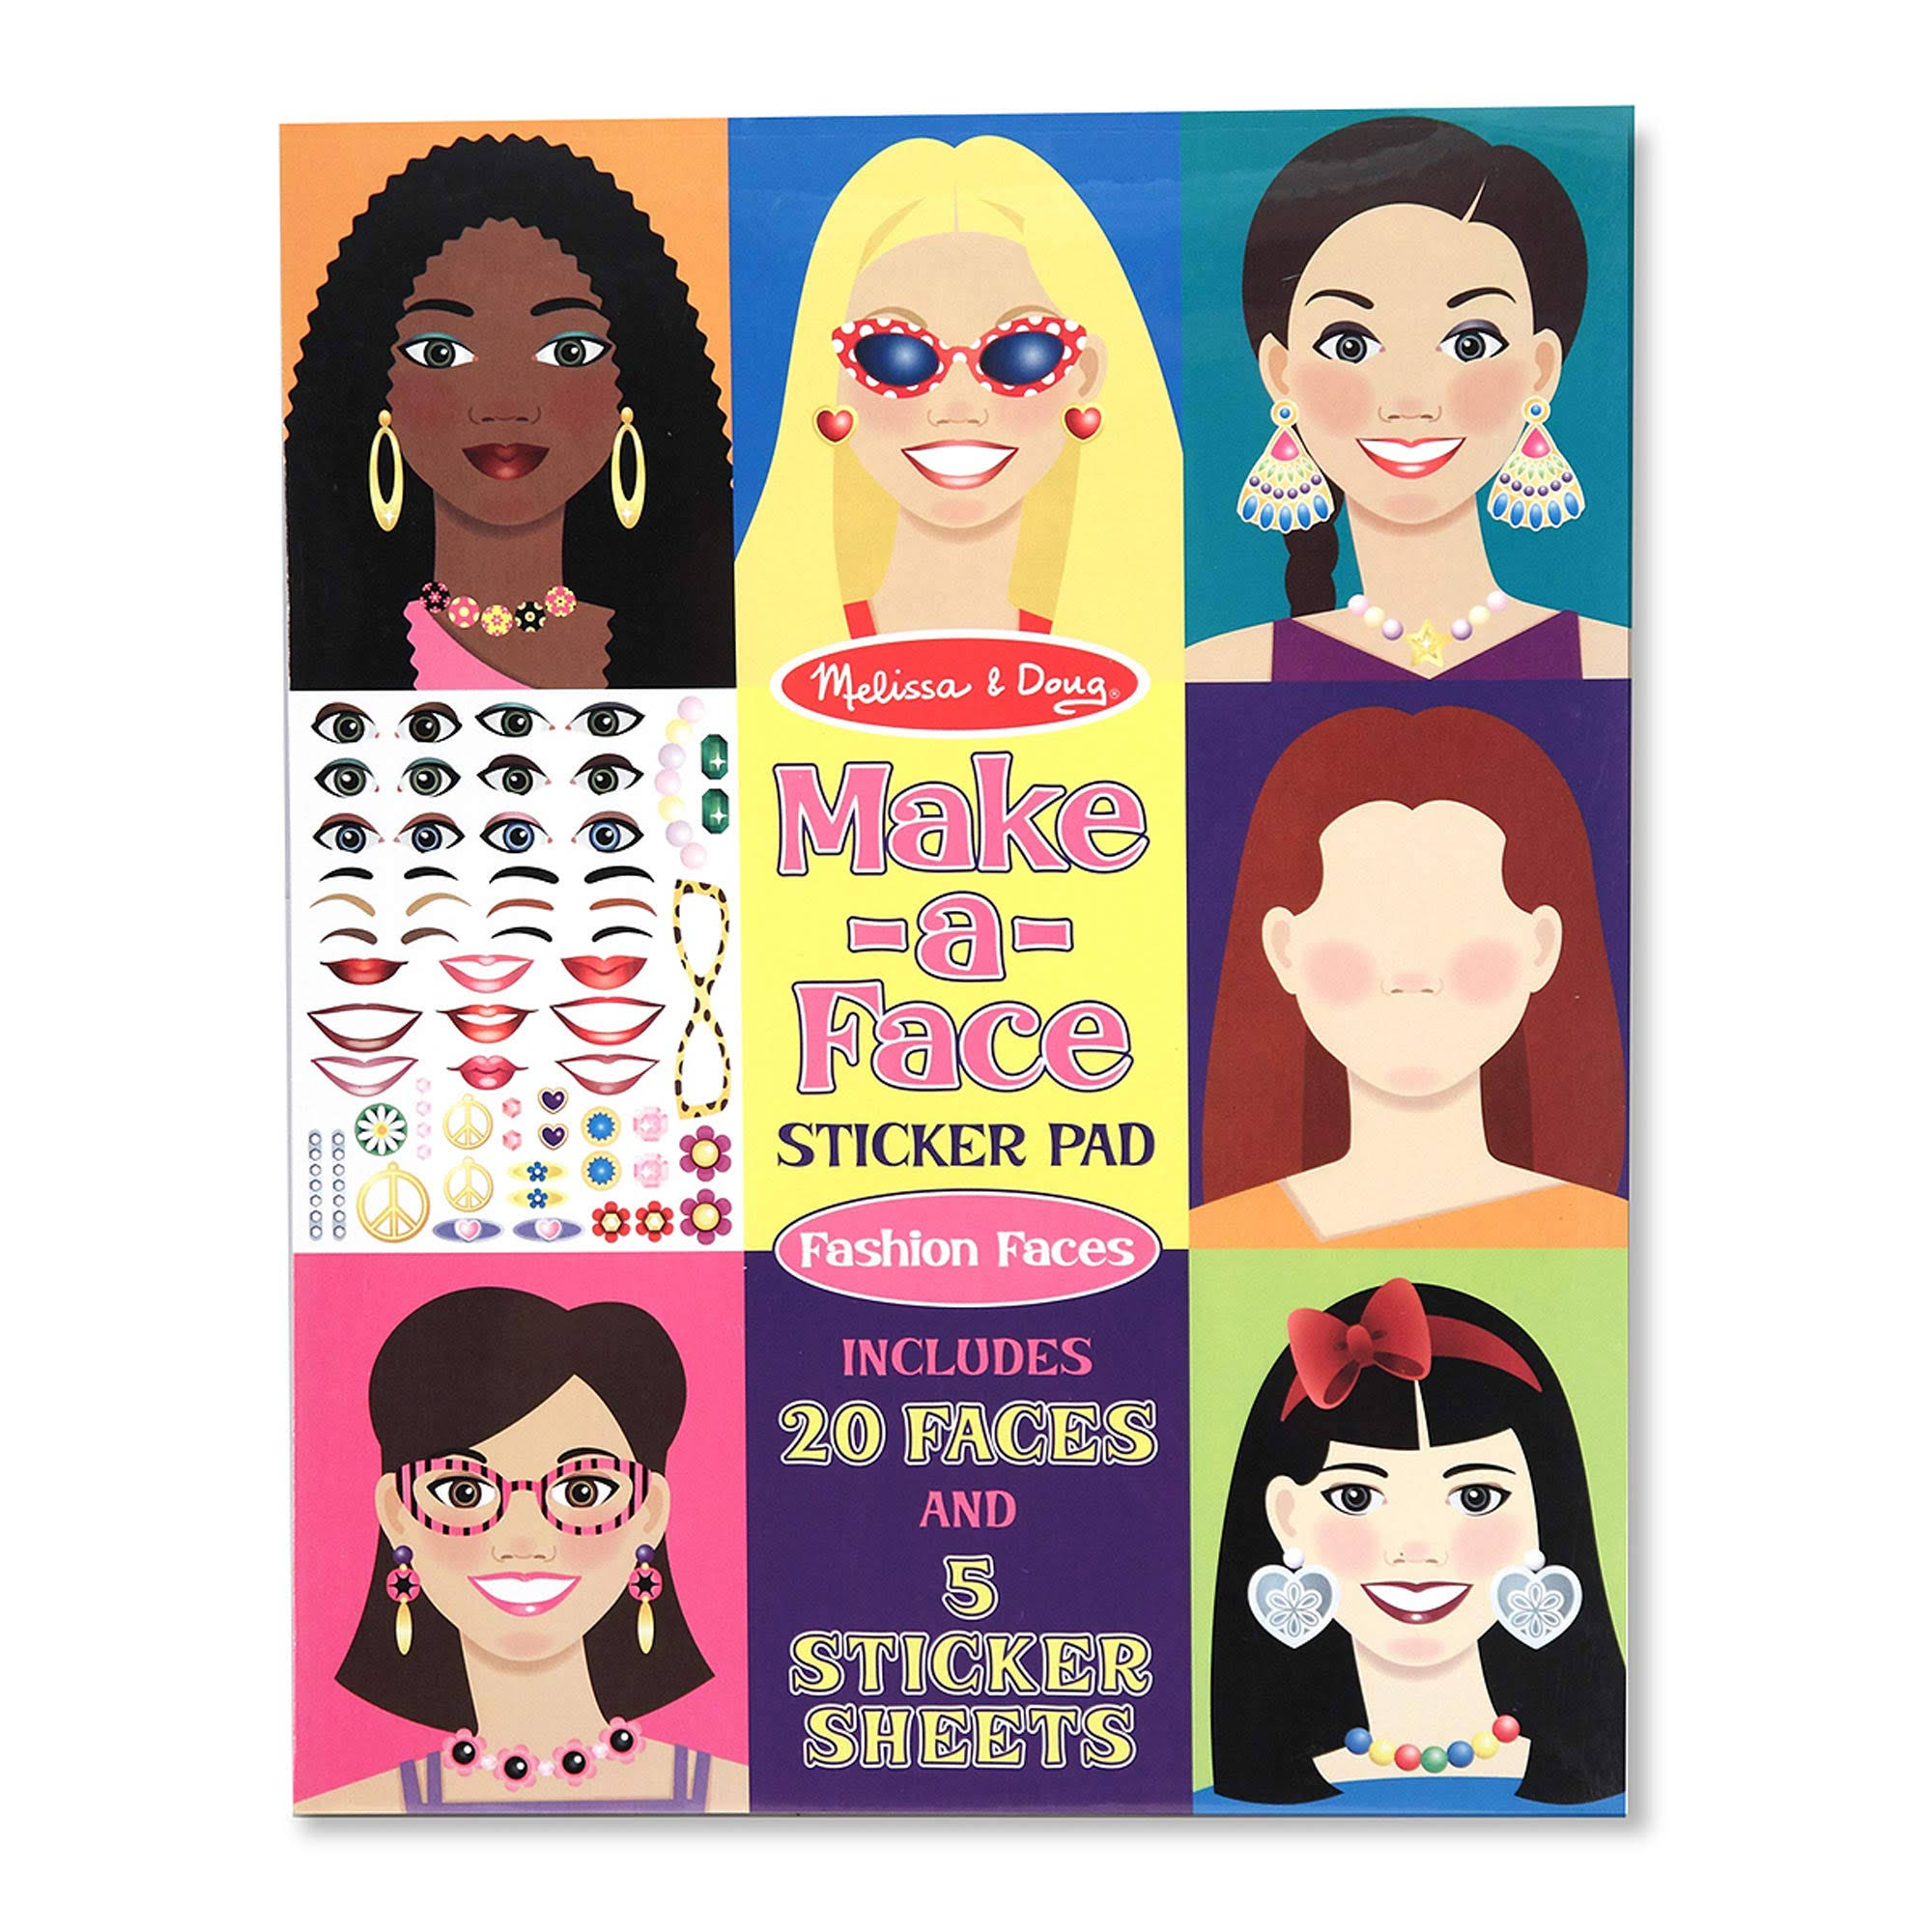 Make-A-Face Fashion Faces Sticker Pad